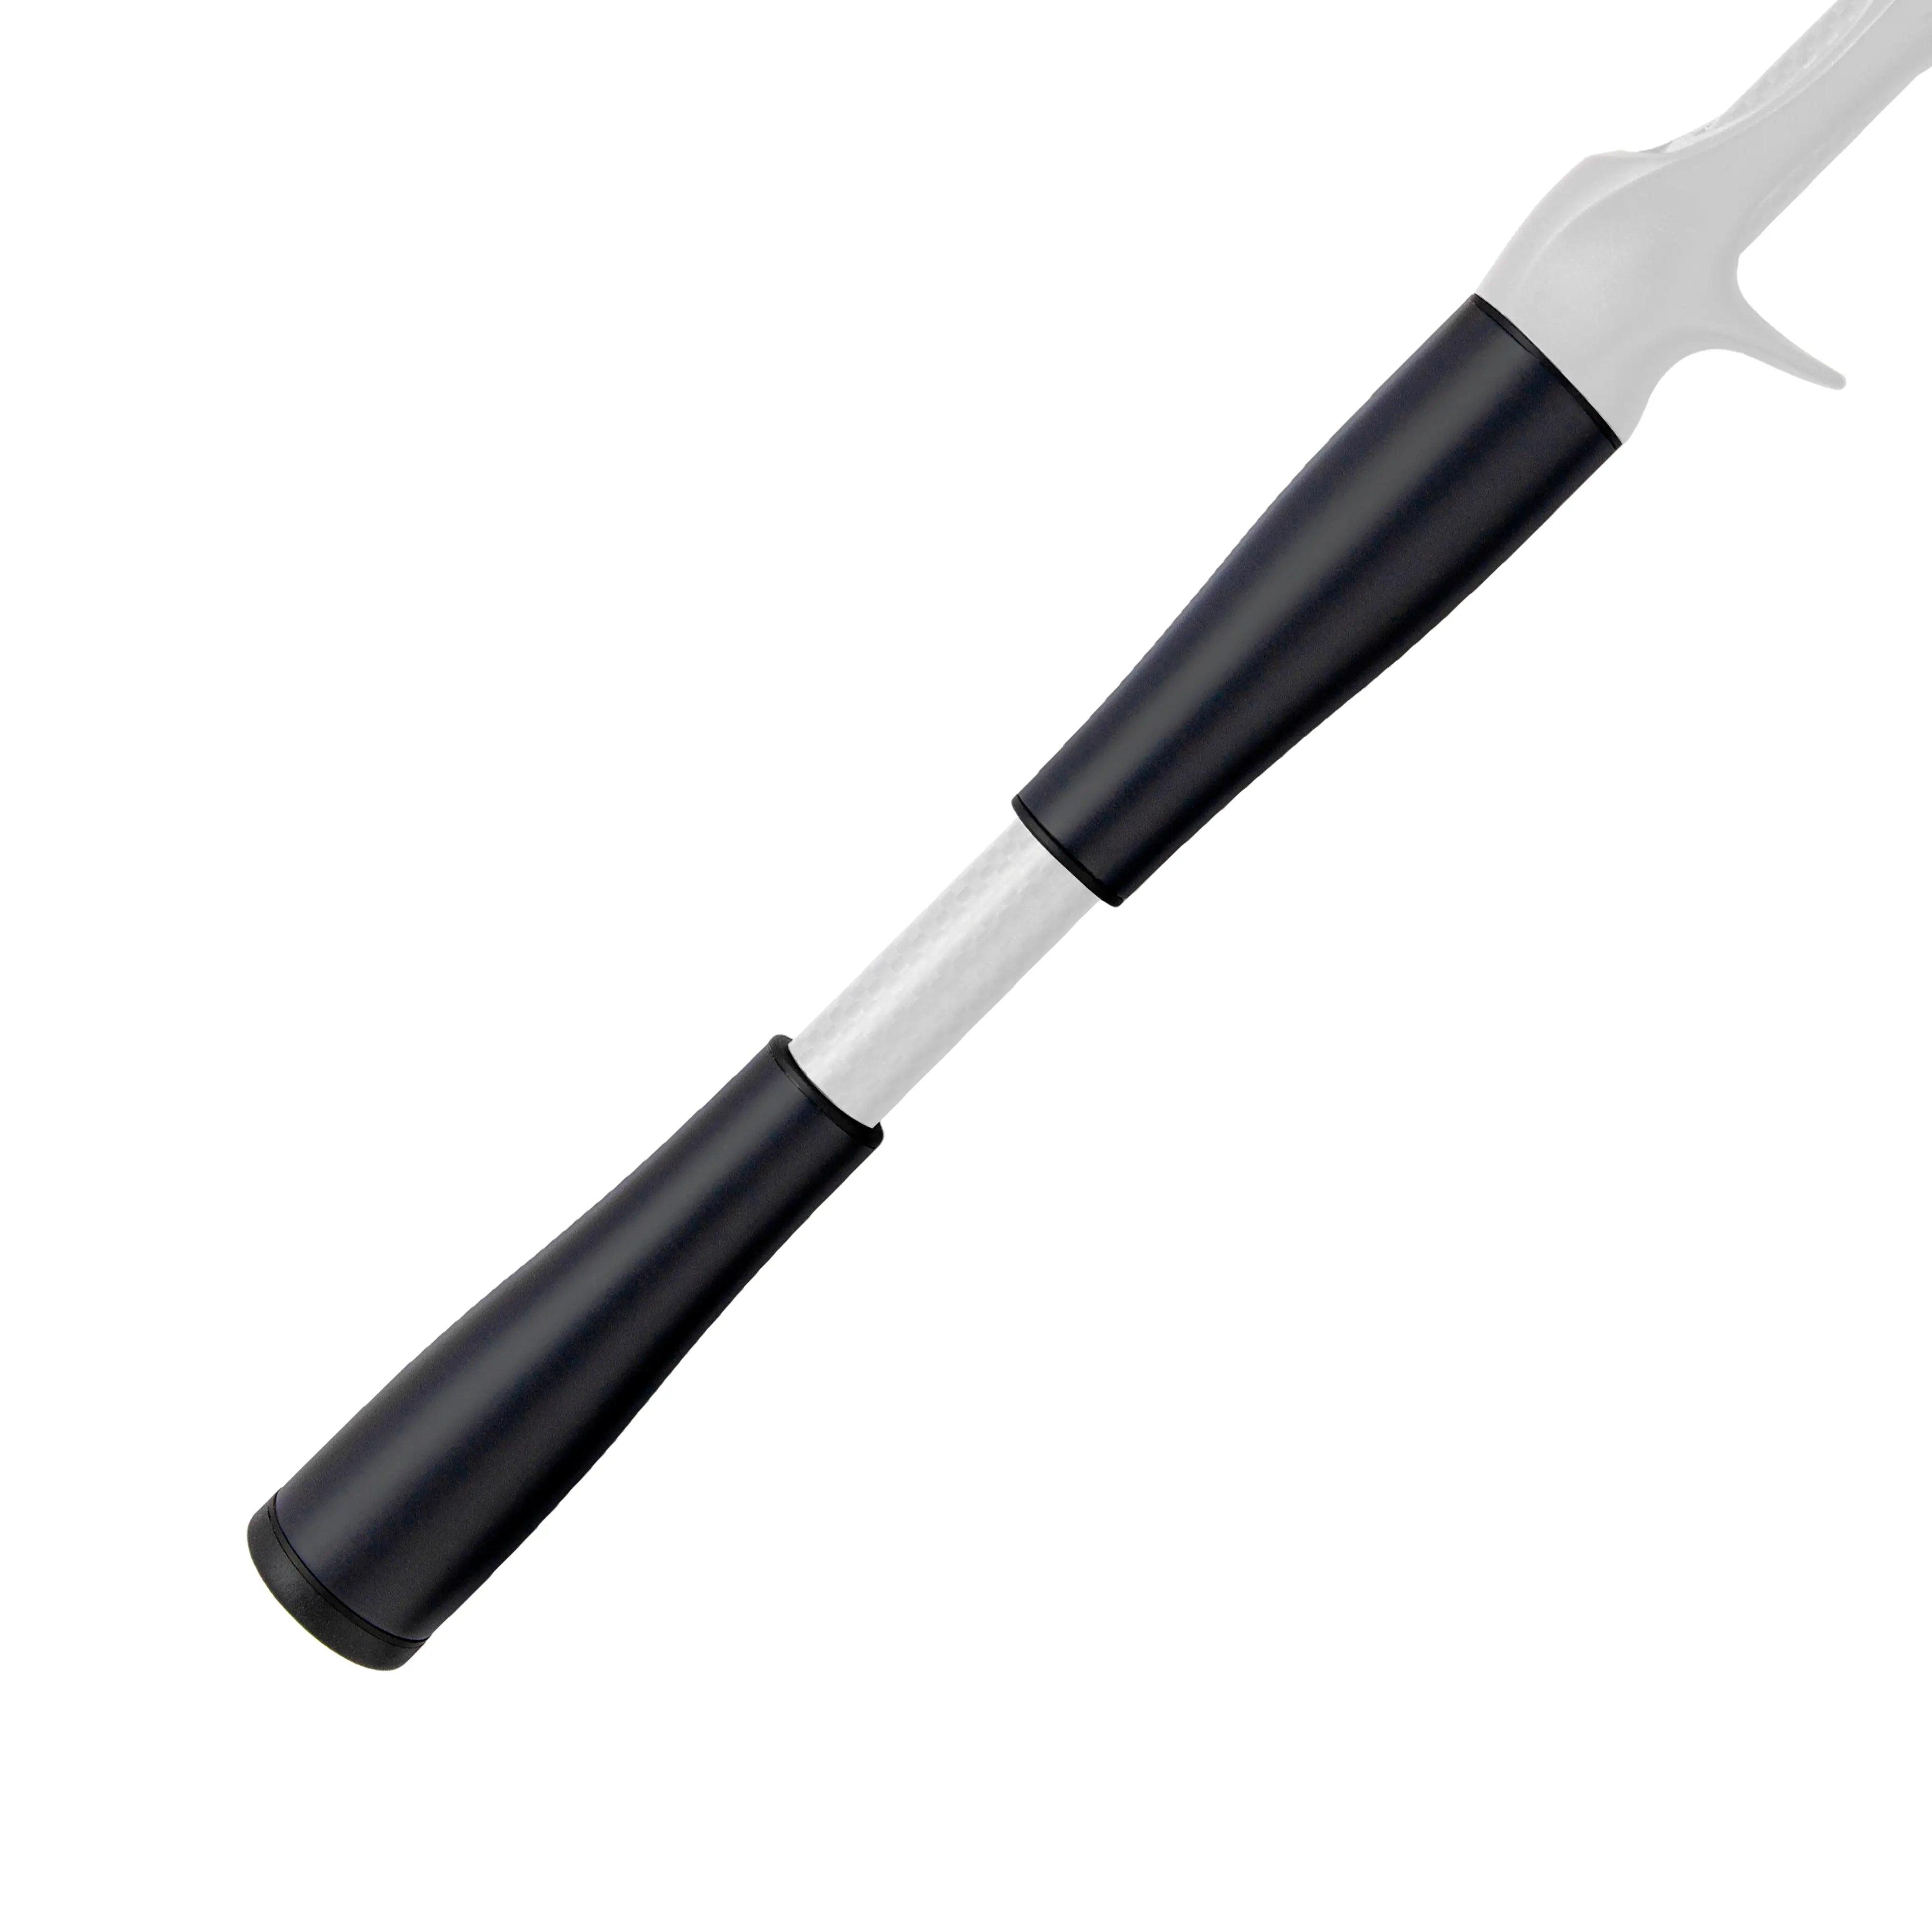 G2 Split Grip Carbon Handle Grip Kit for Casting Rods - Clearance